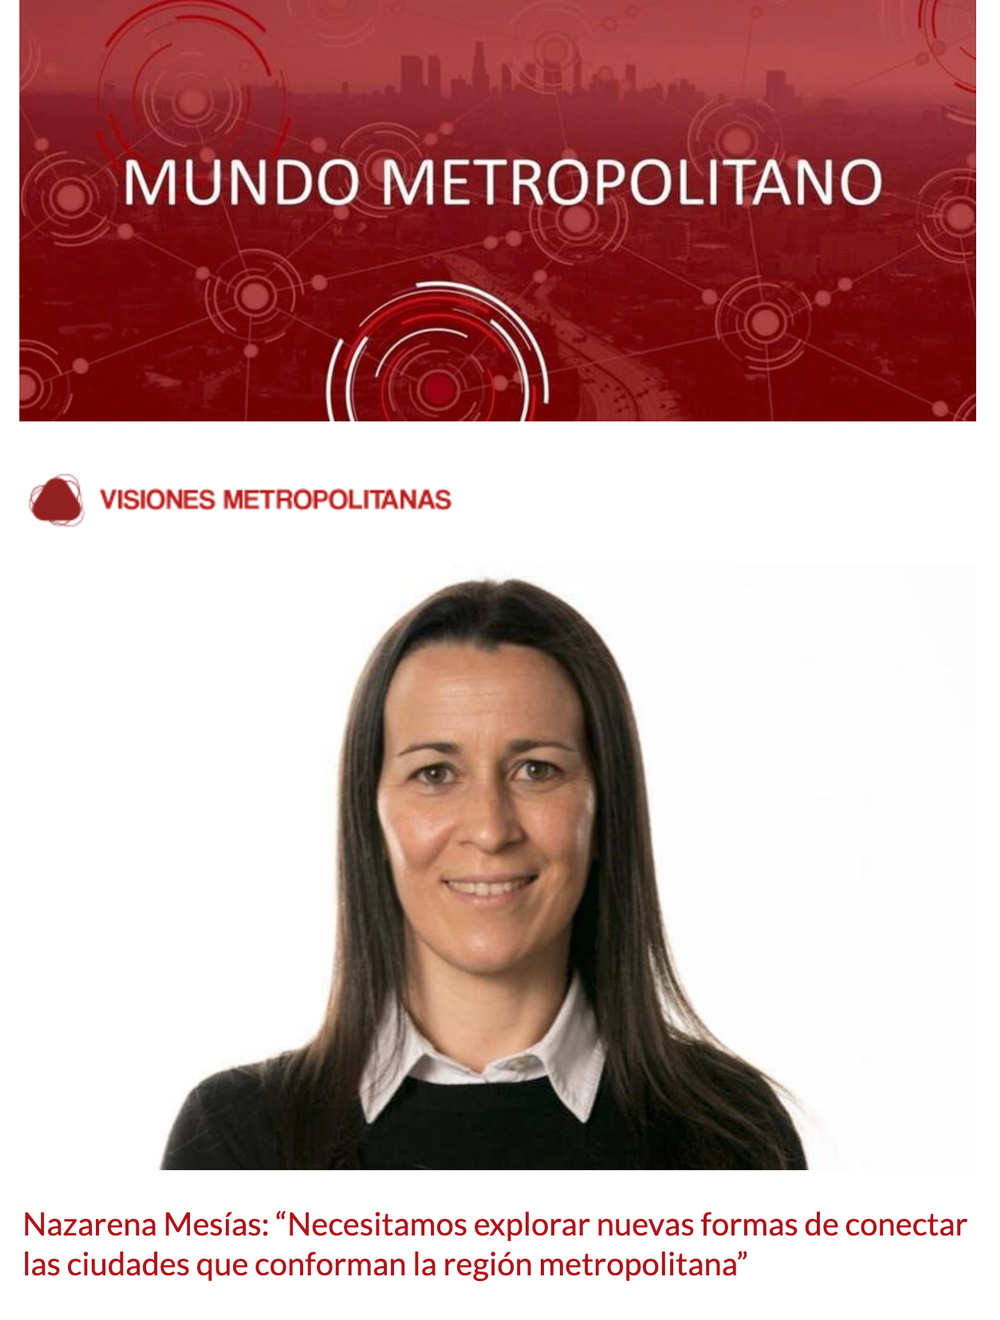 Newsletter Mundo Metropolitano 9